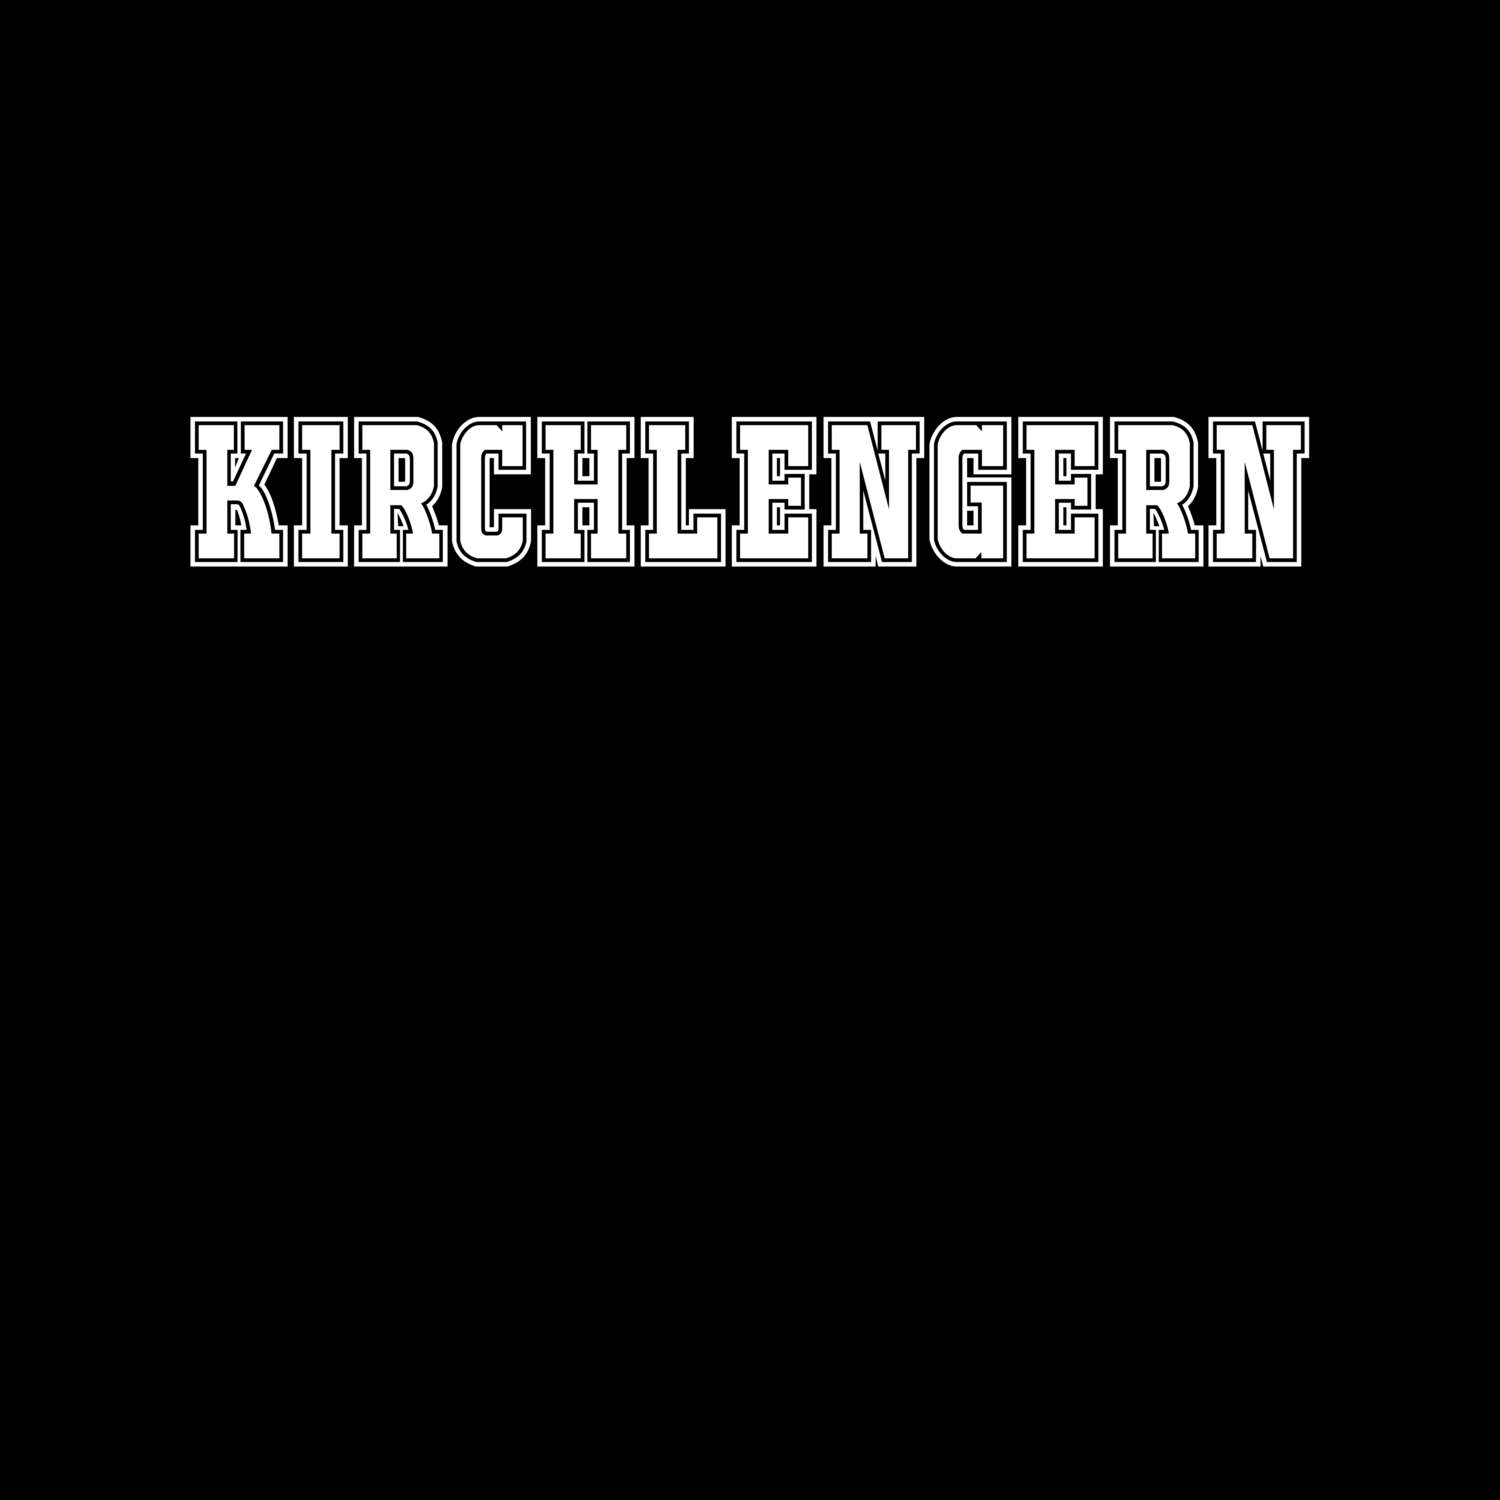 Kirchlengern T-Shirt »Classic«